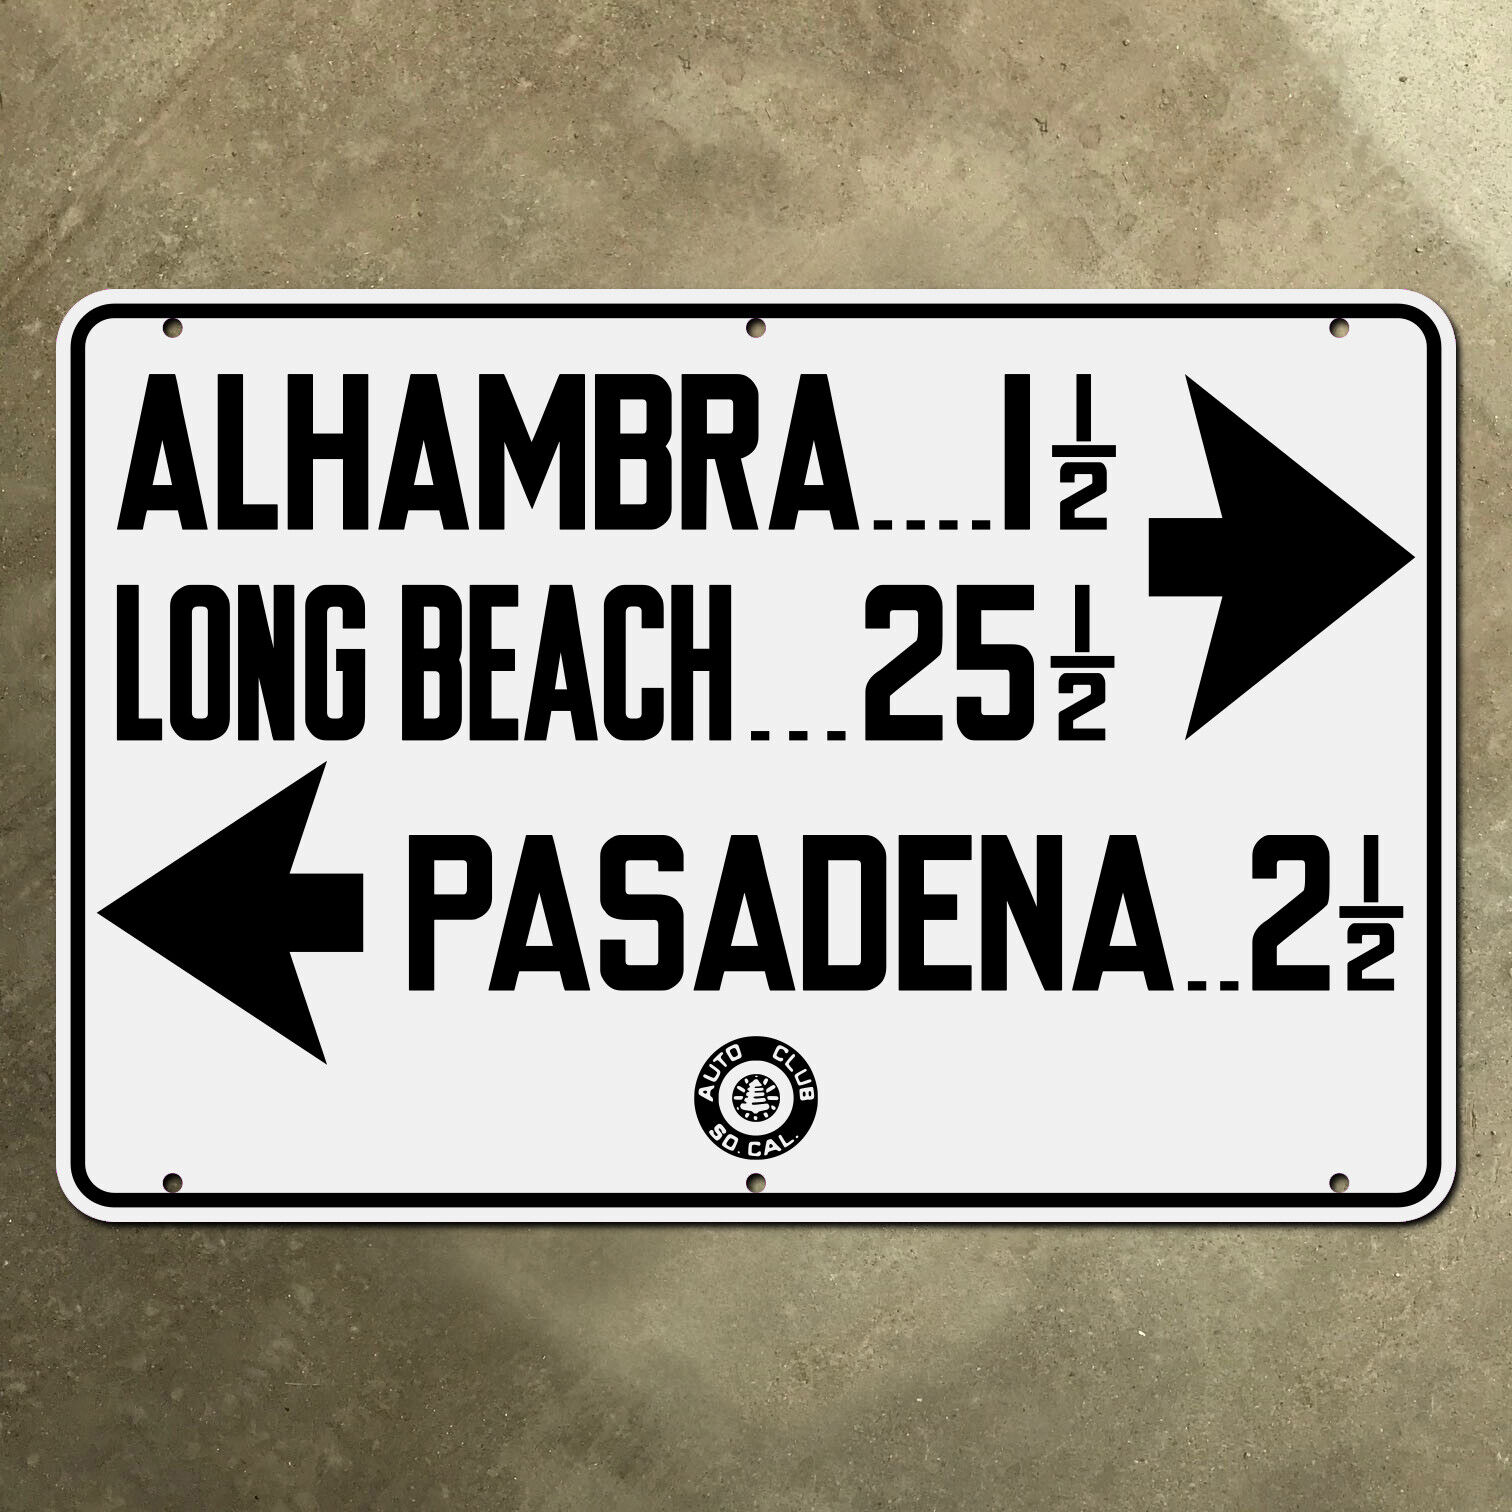 ACSC Alhambra Long Beach Pasadena highway road guide sign 1935 California 15x10